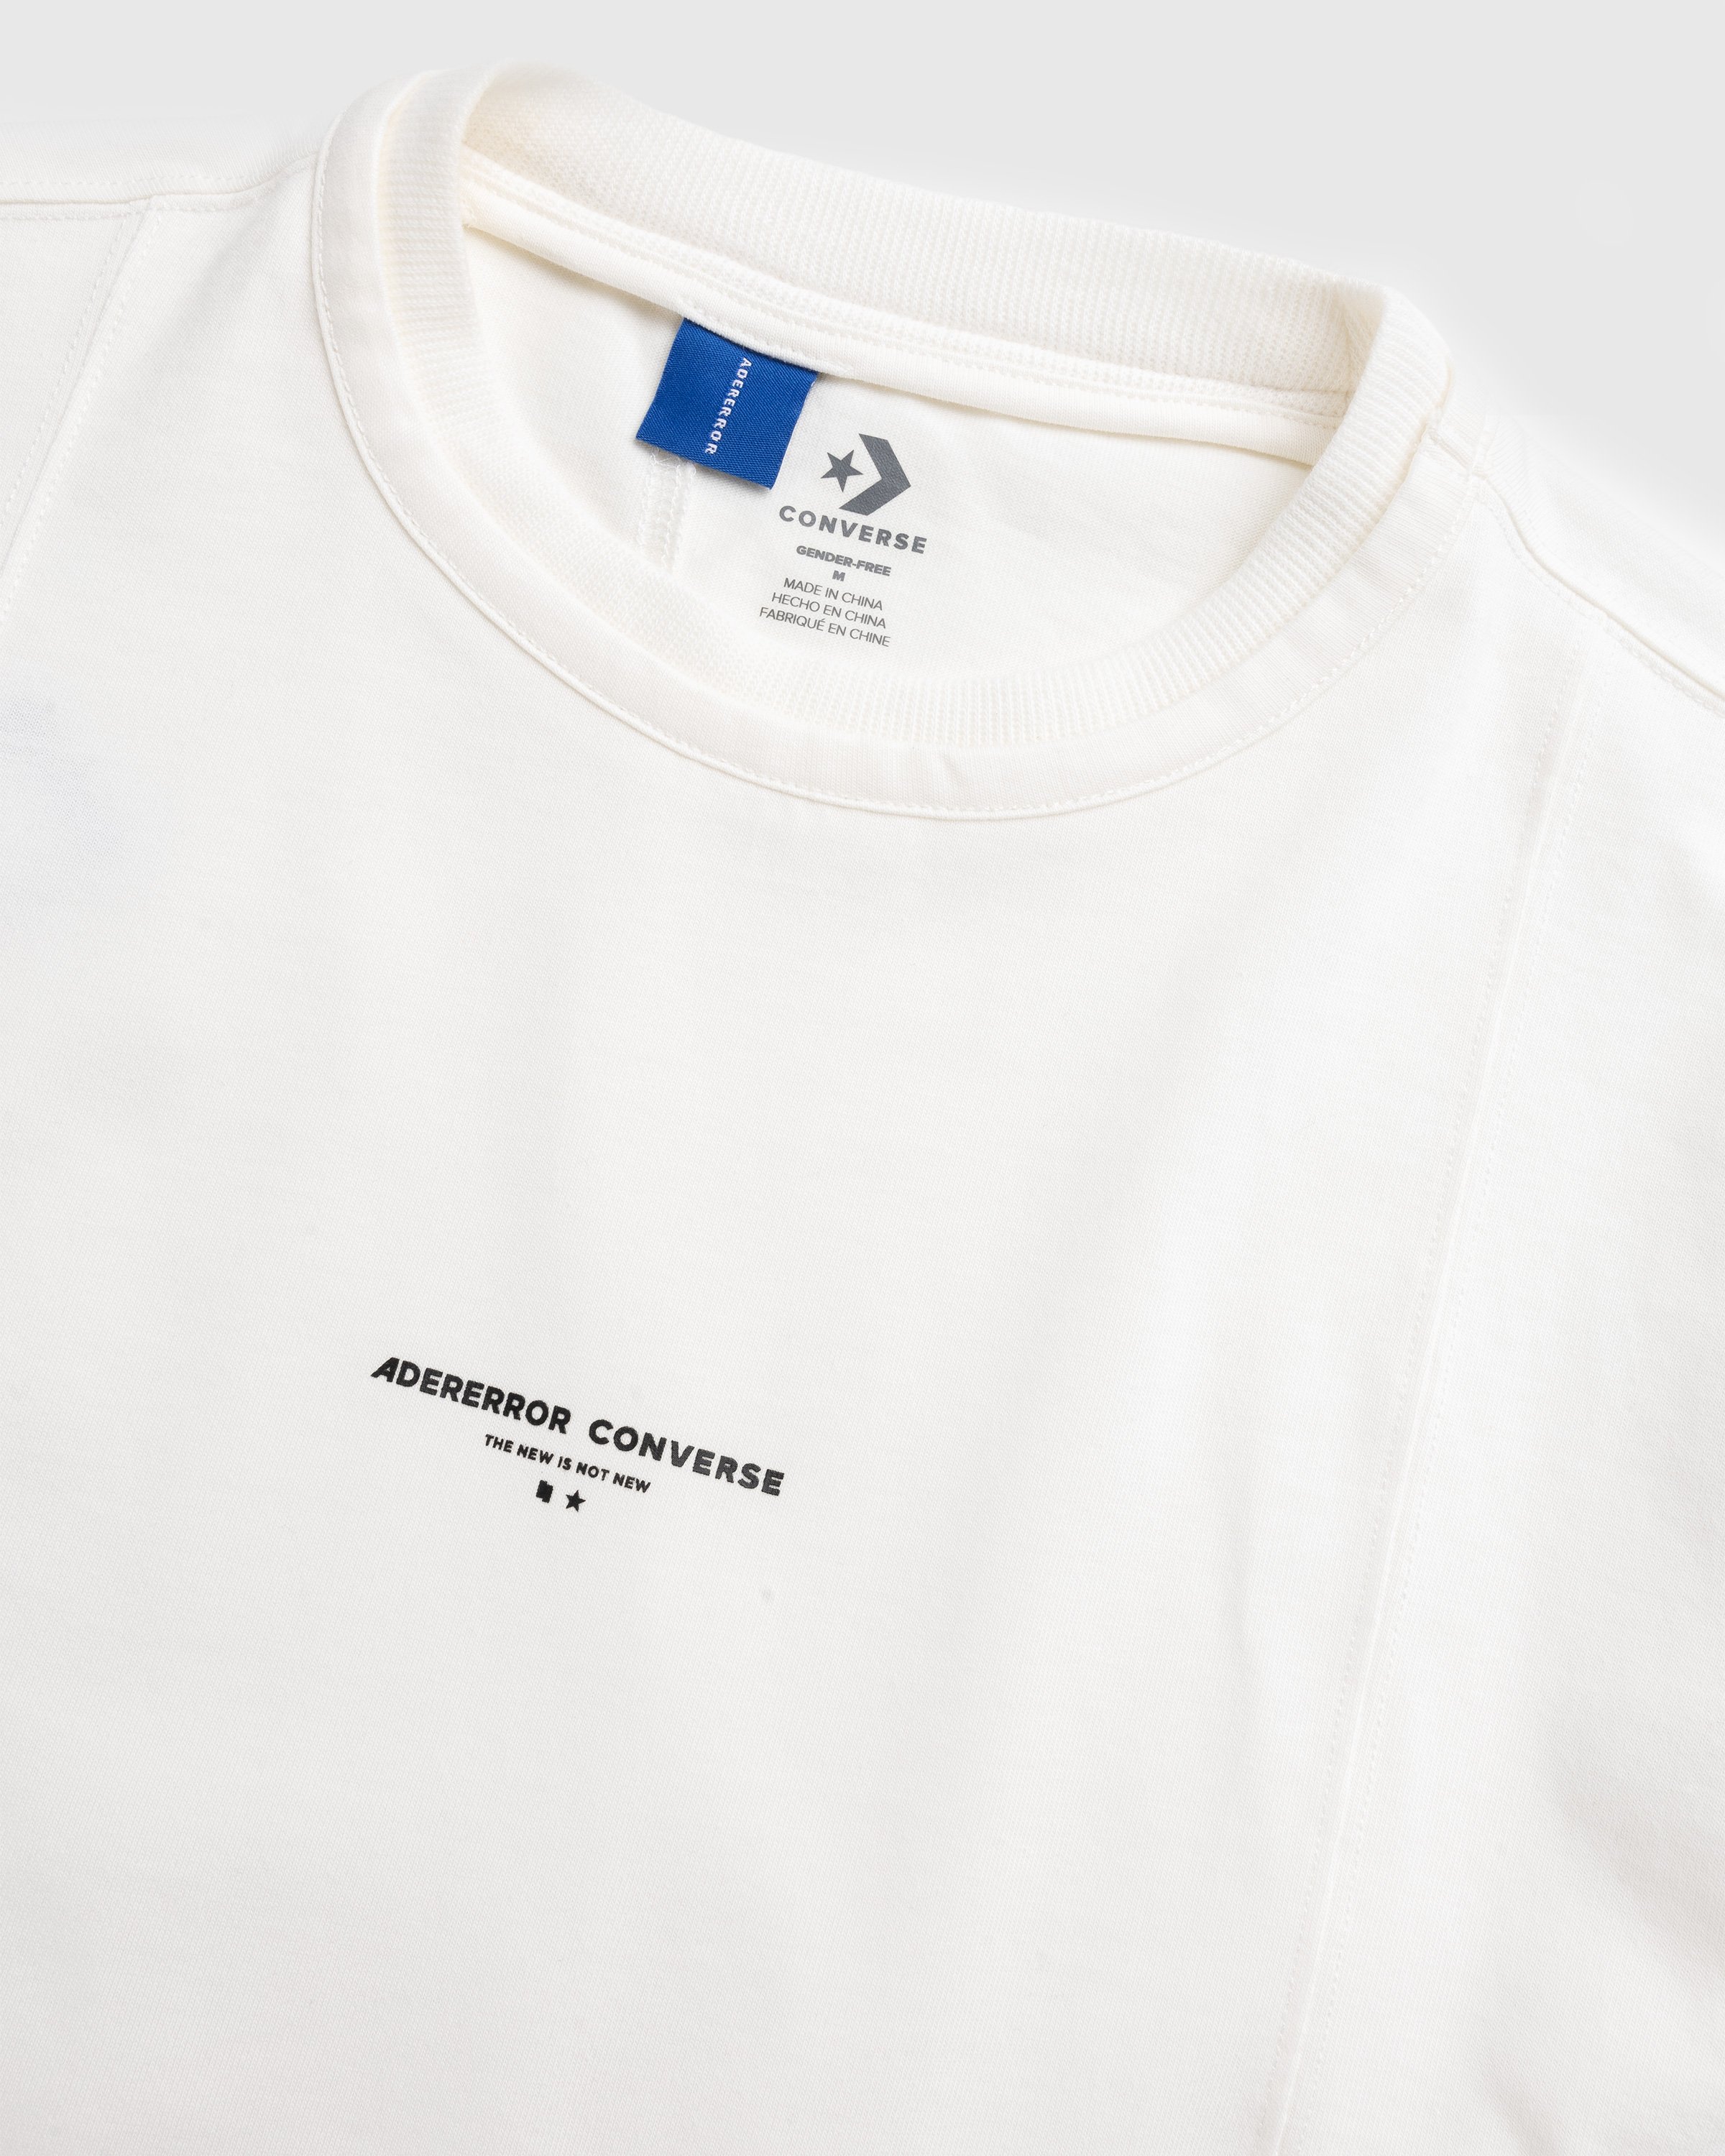 Converse x Ader Error - Shapes T-Shirt Cloud Dancer - Clothing - Beige - Image 5